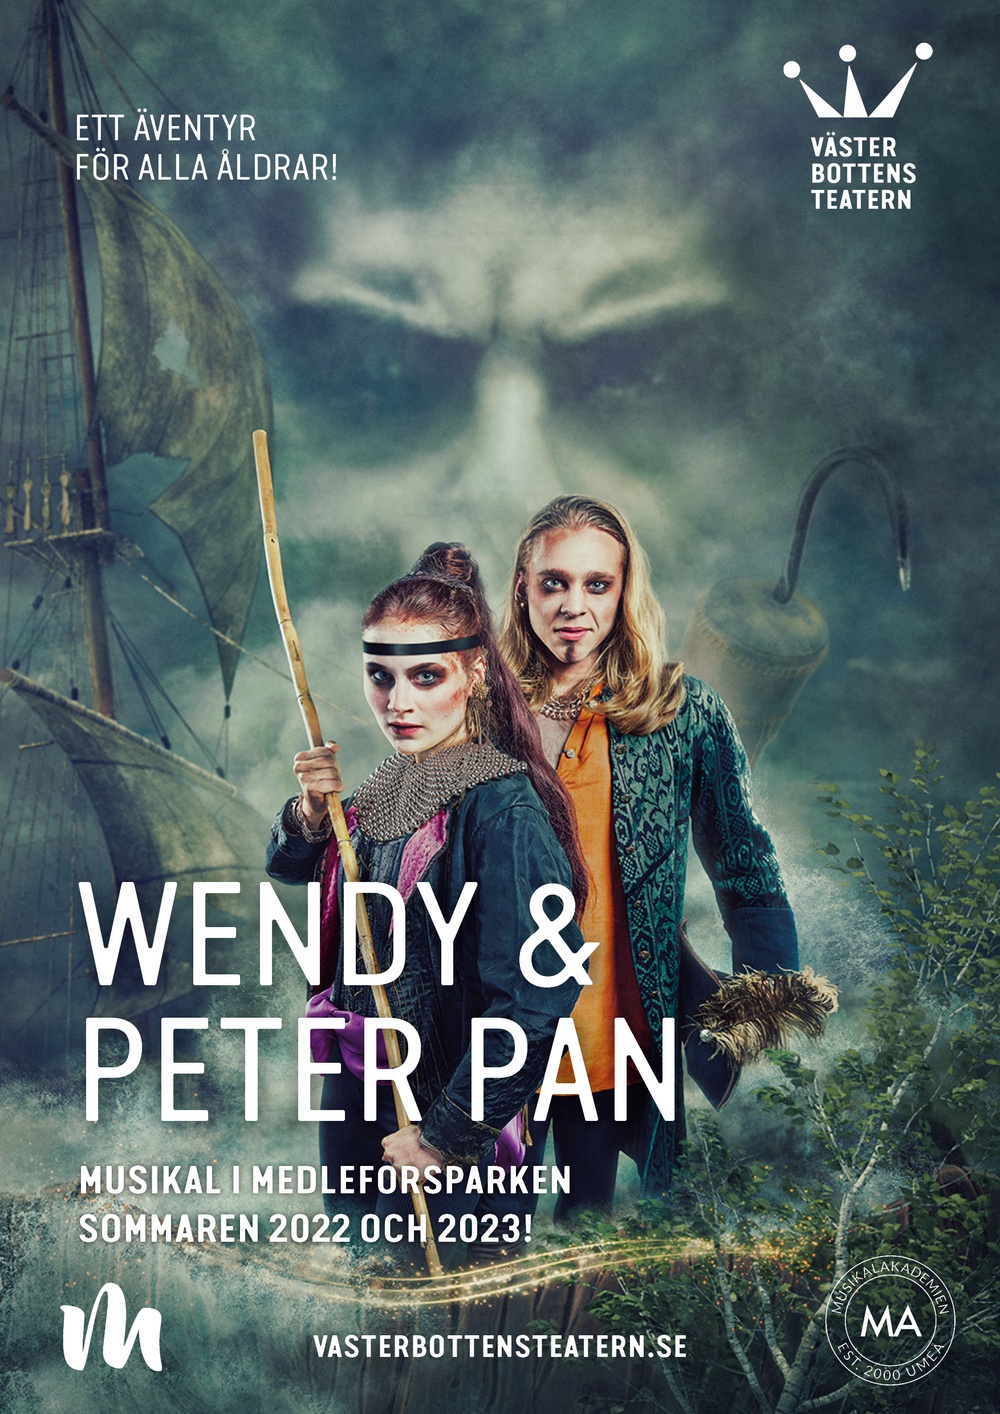 Wendy och Peter Pan. Foto: LisaLove Bäckman
Wendy - Matilda Dahletun
Peter Pan - Oliver Raise Bjurström